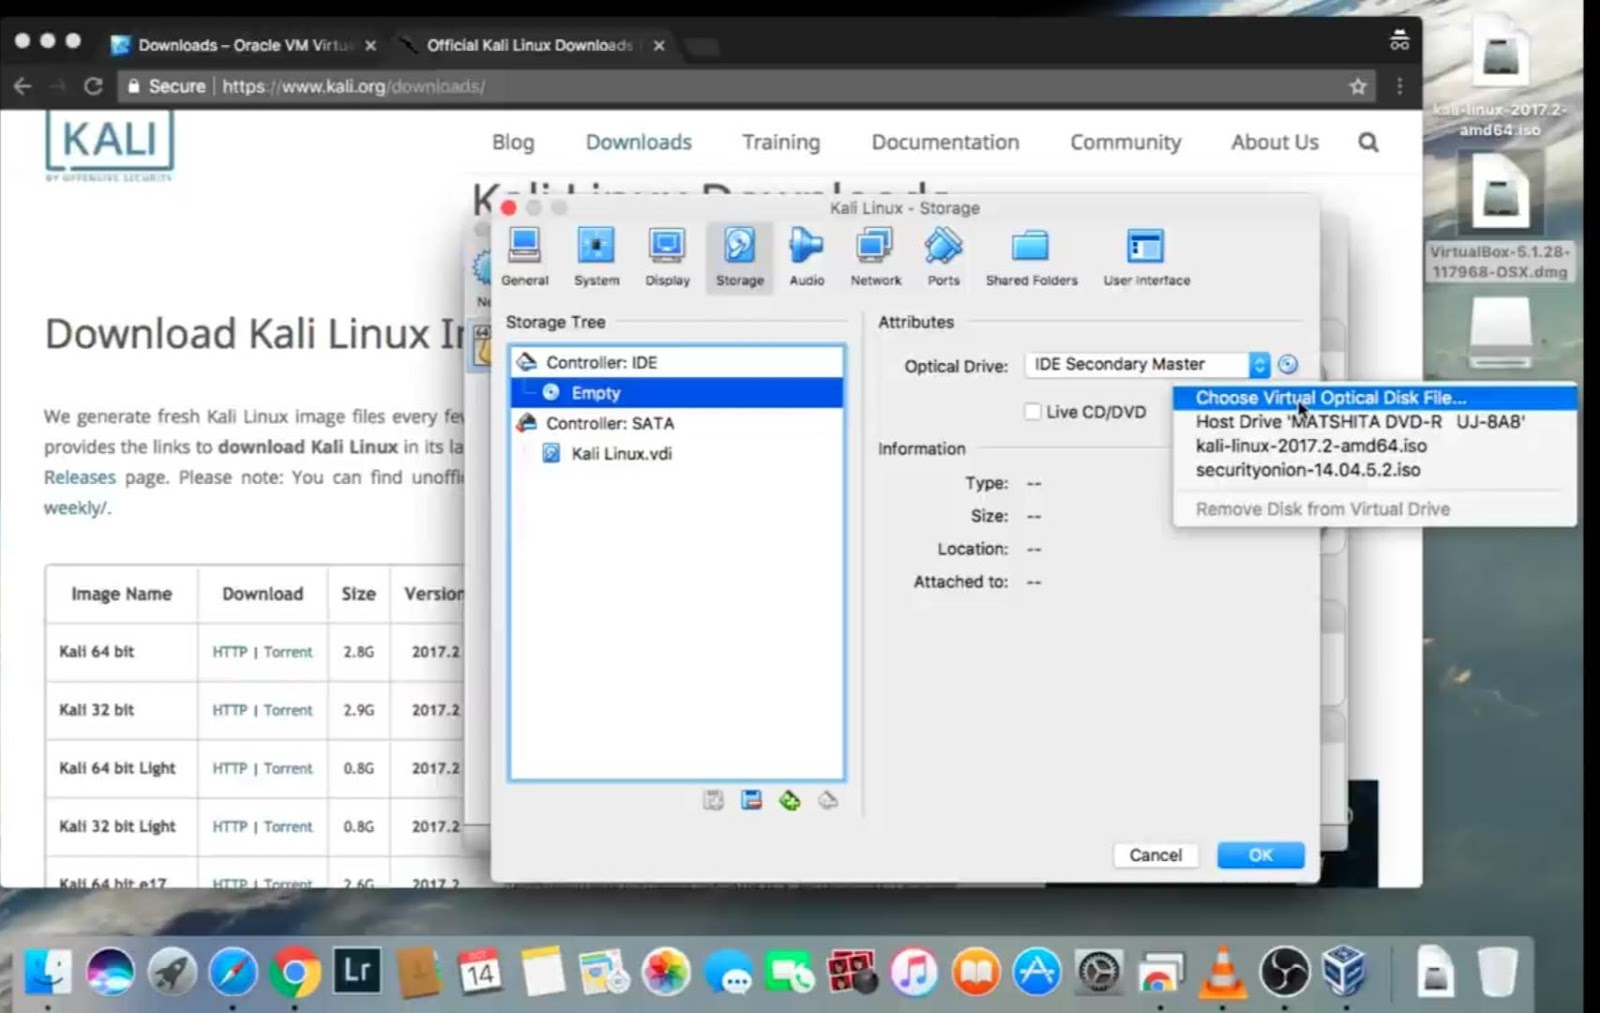 fST9S33Us4AmkPU7YkUf1l - How to install Kali Linux on Mac